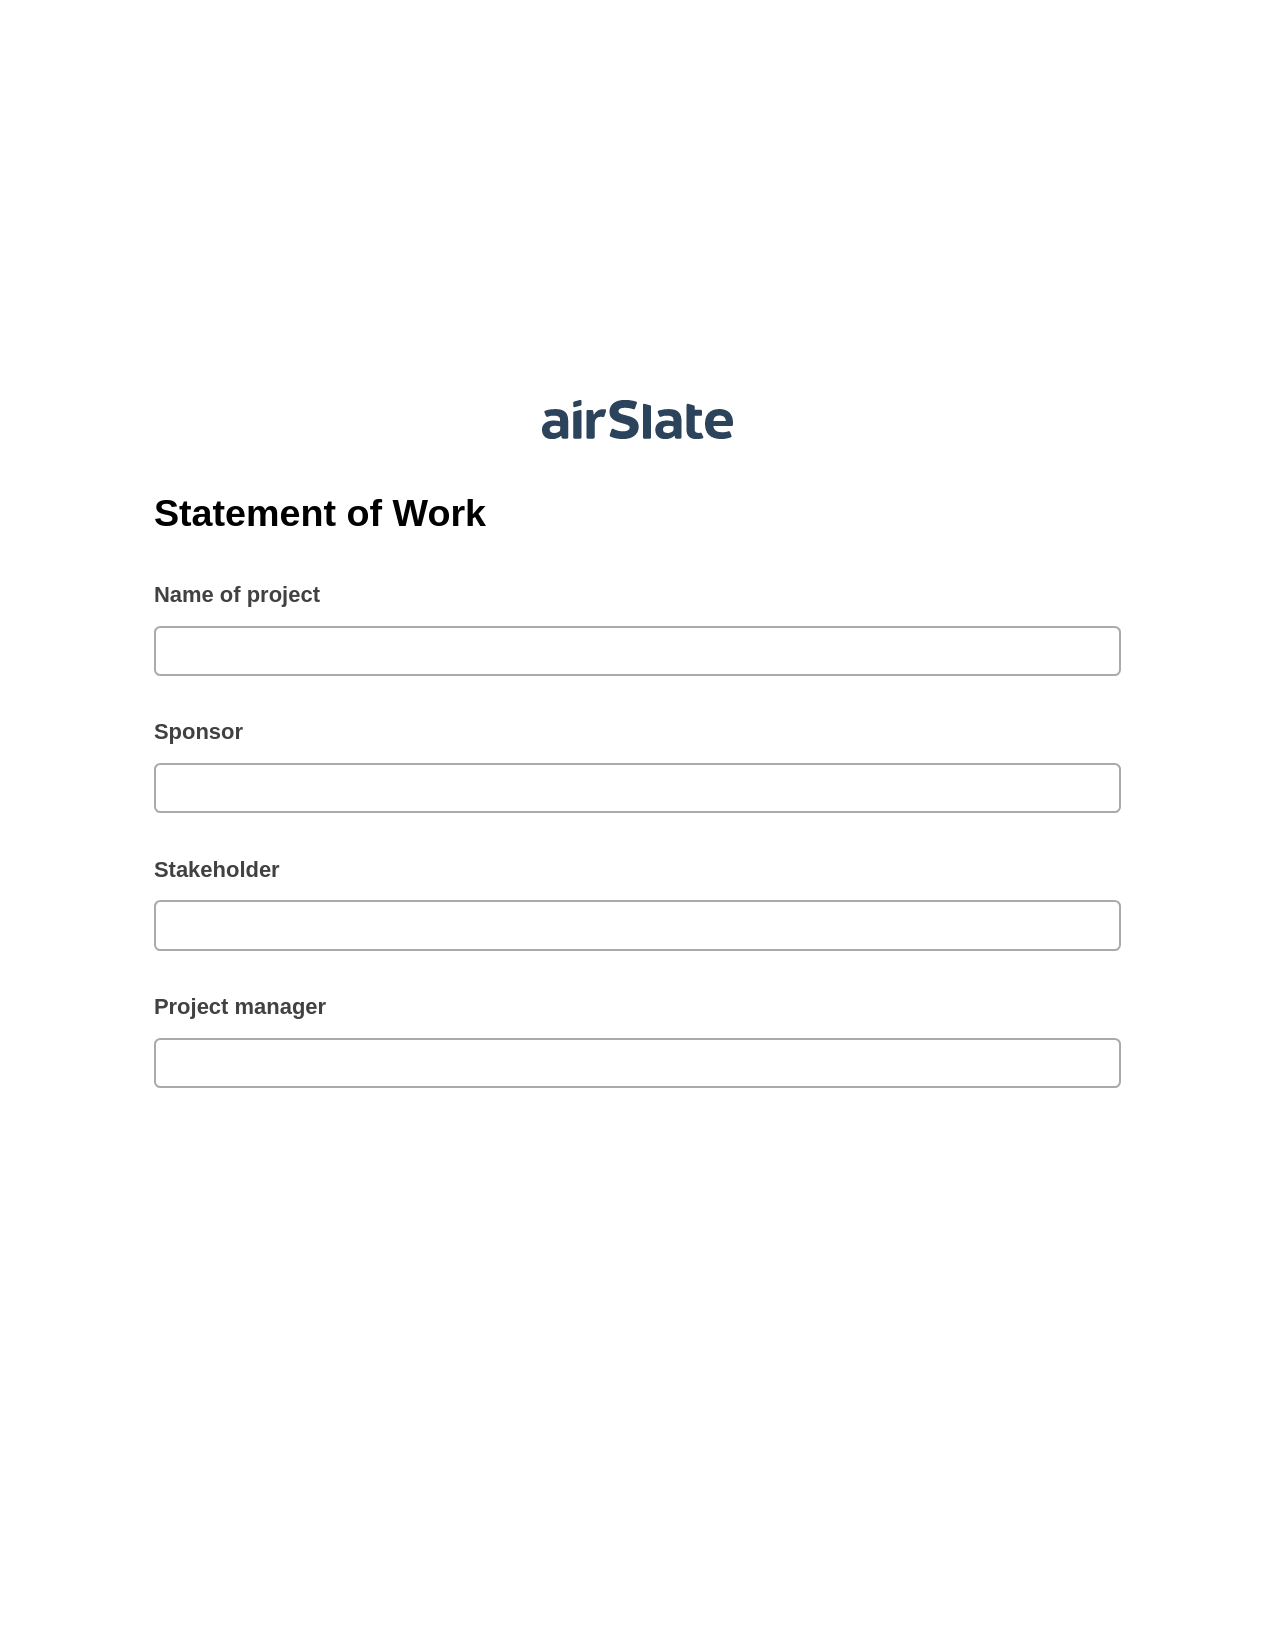 Multirole Statement of Work Pre-fill from CSV File Bot, Invoke Salesforce Process Bot, Export to Google Sheet Bot